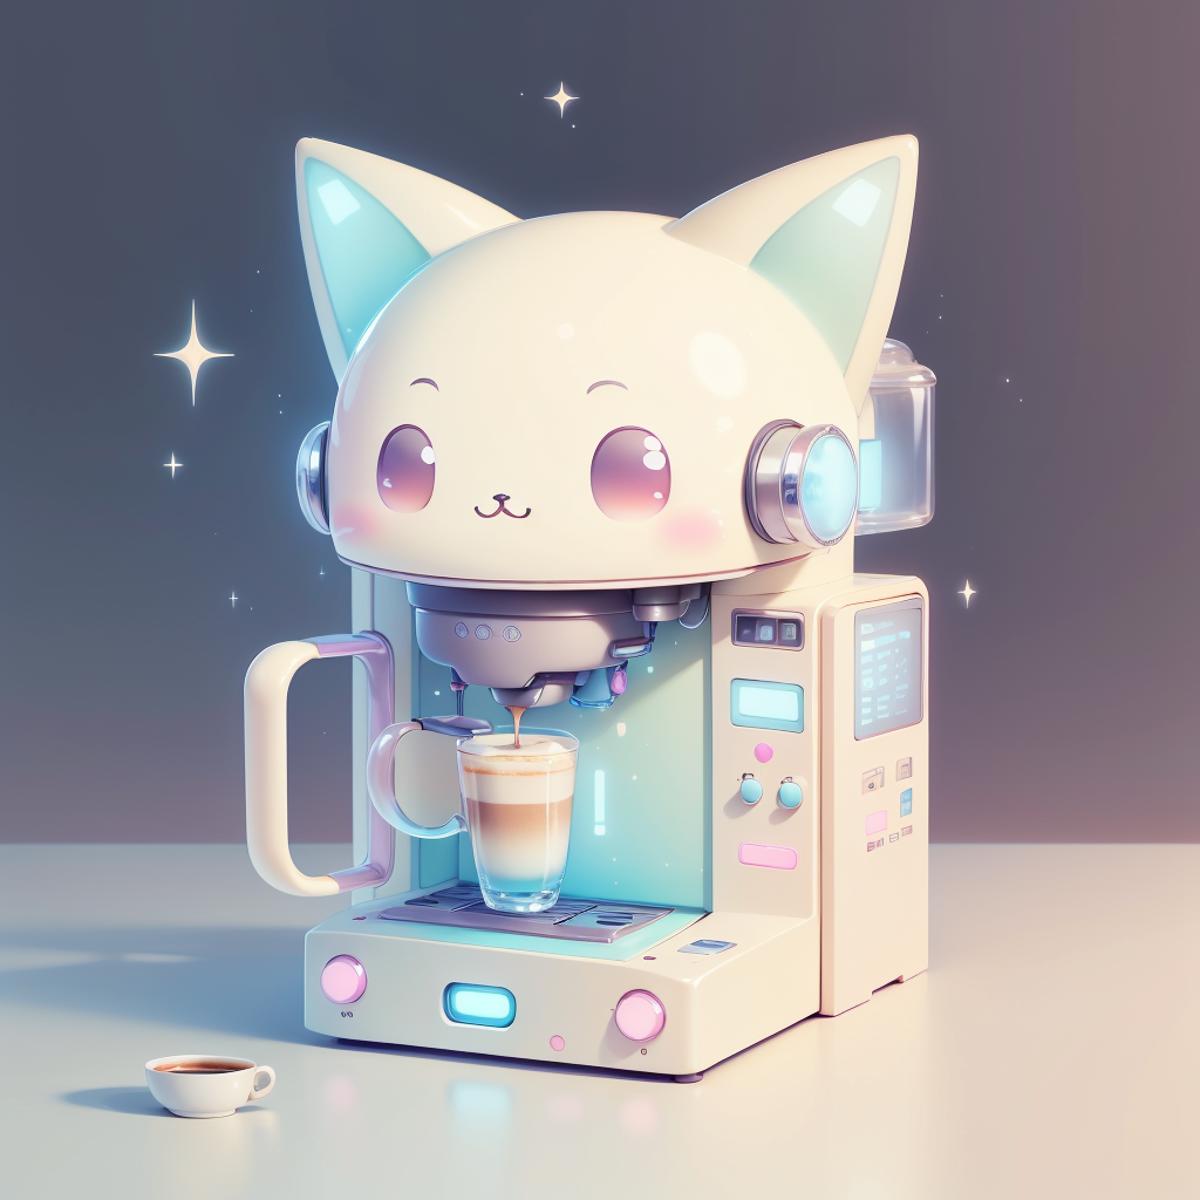 A whimsical coffee machine shaped like a cat.